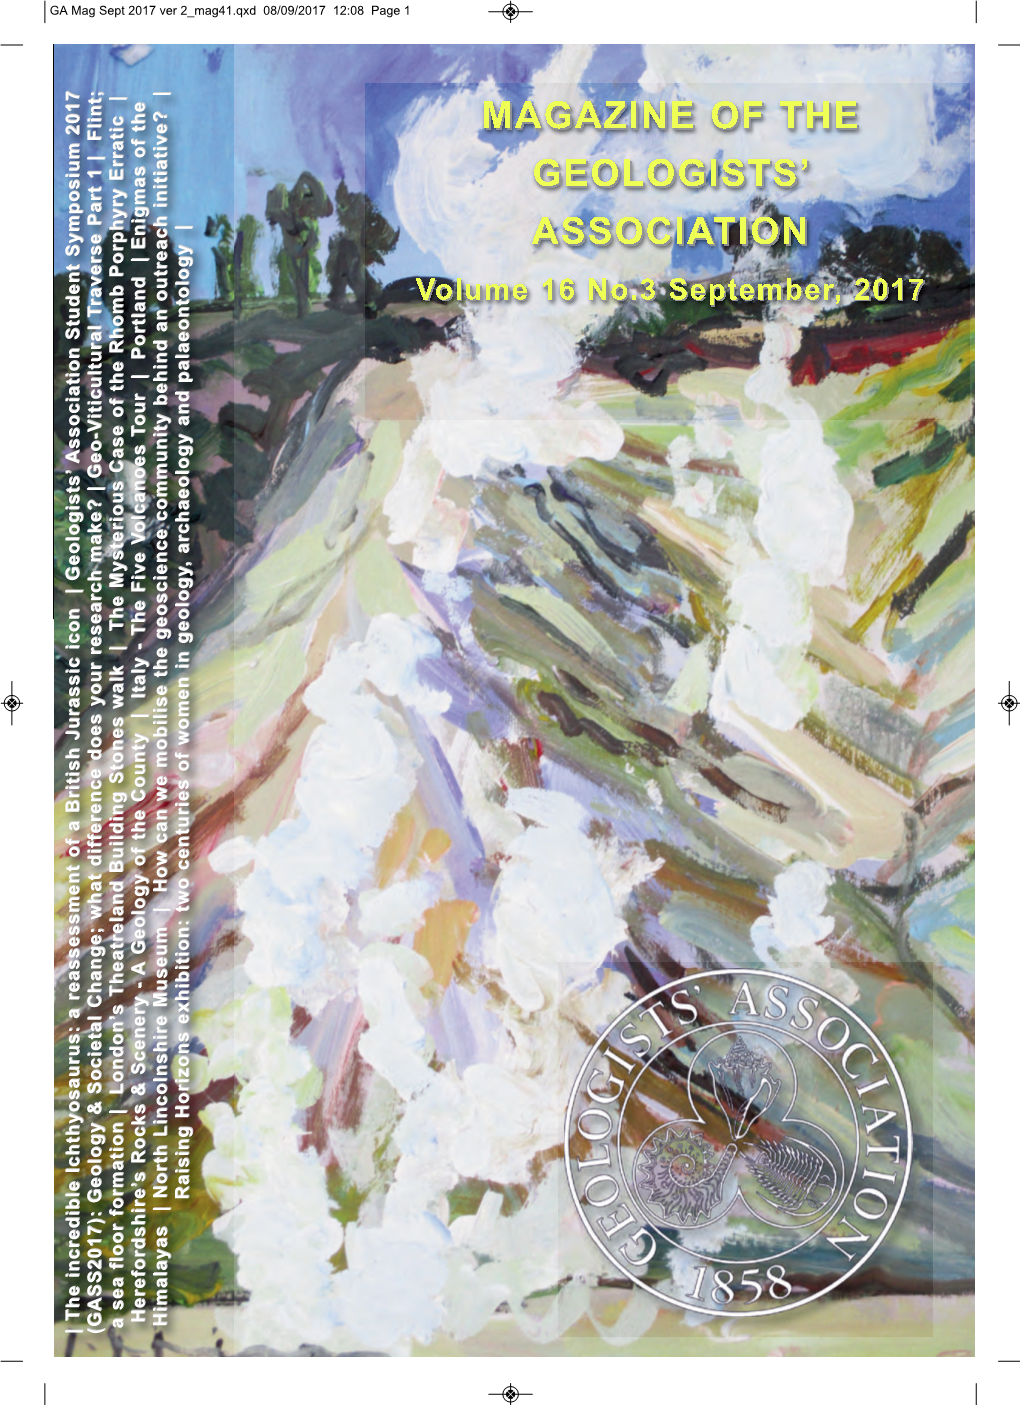 Vol 16, Issue 3, September 2017